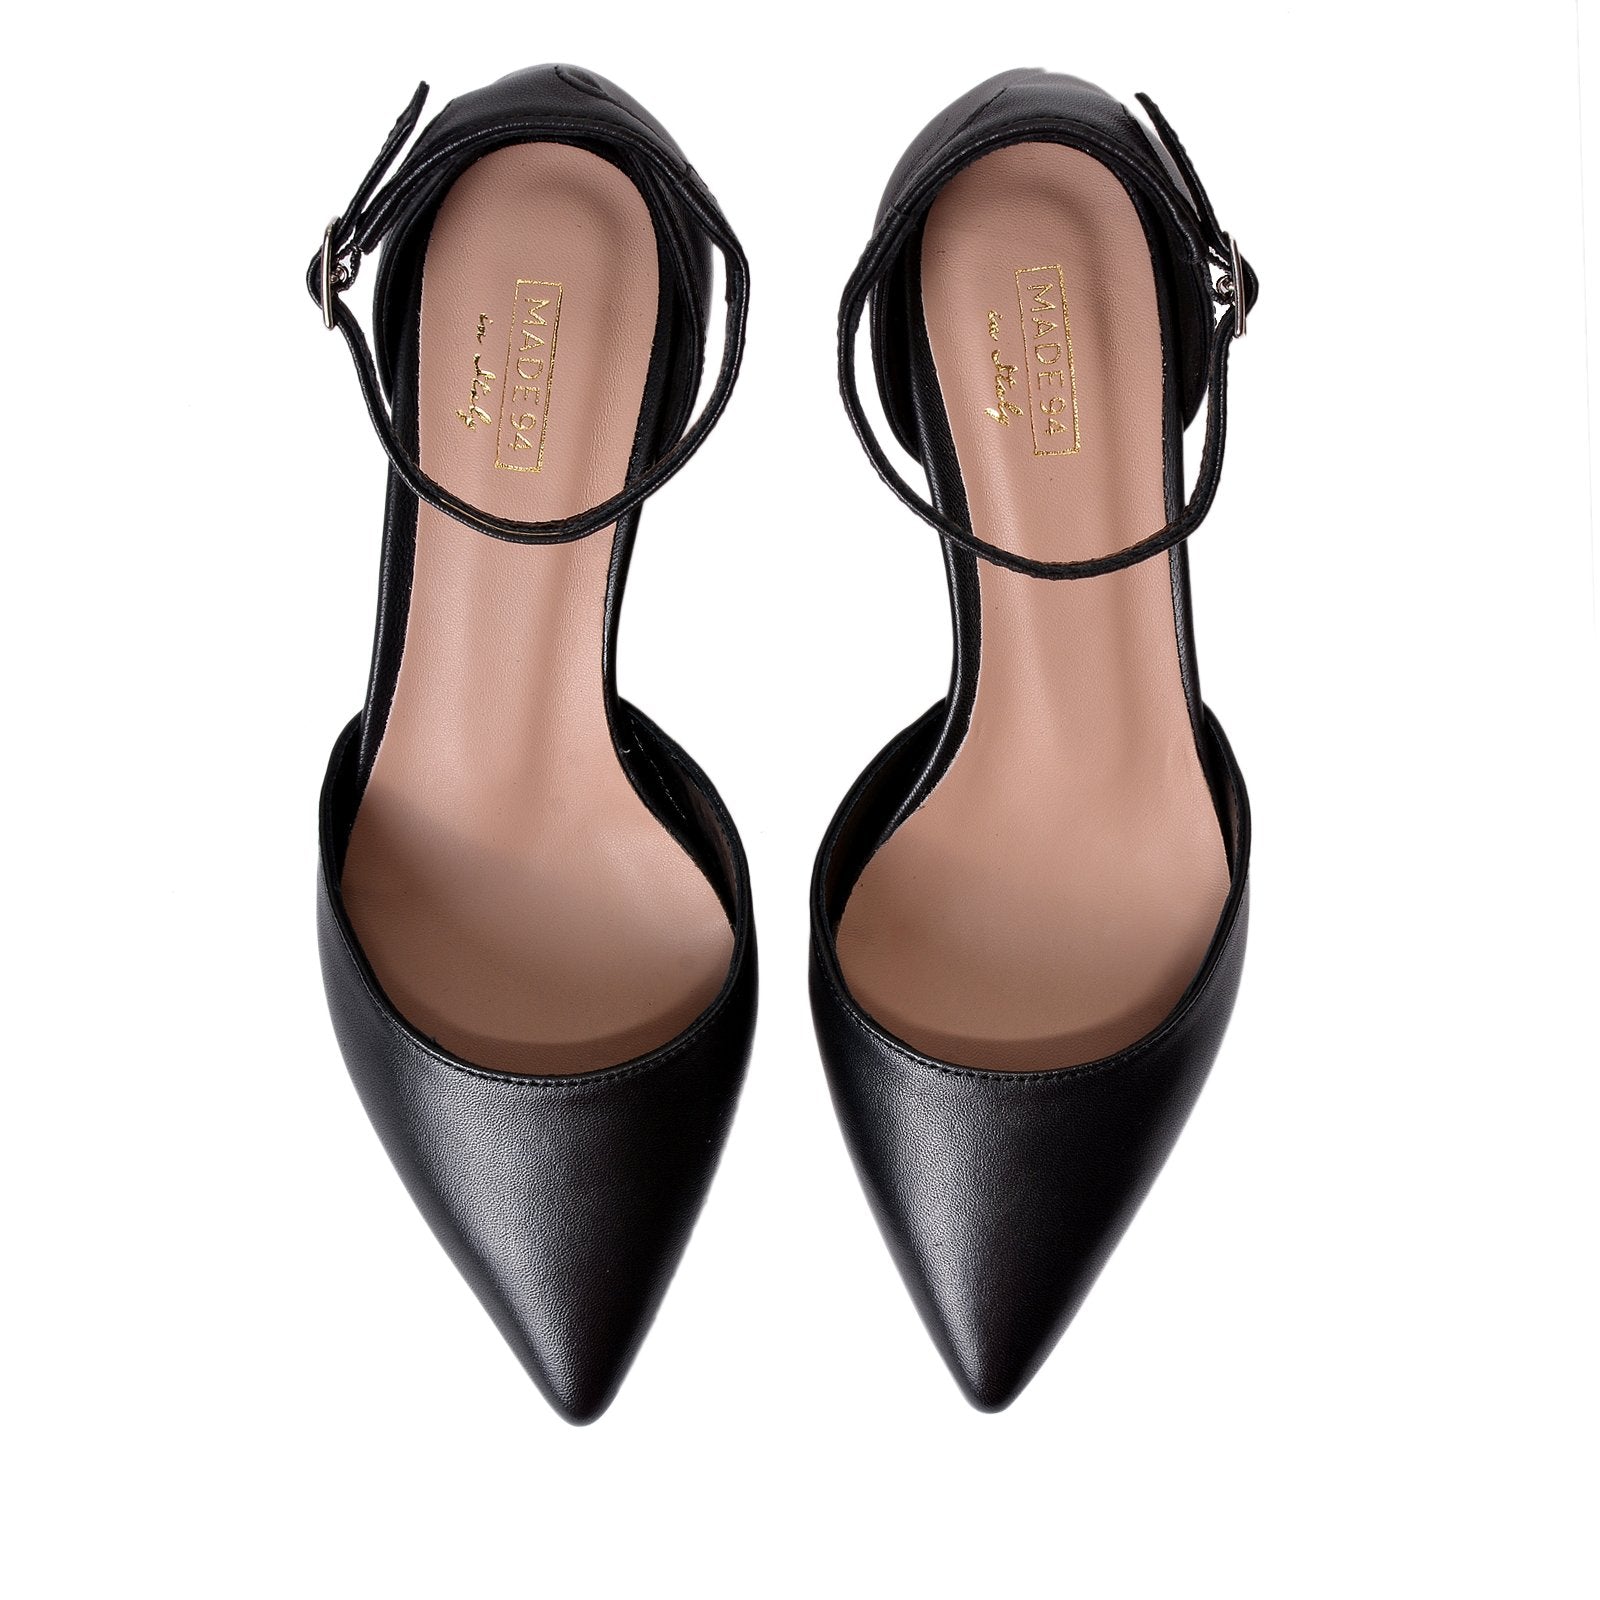 Viki Black Nappa Leather Shoes Heels 790-007-1 - 3